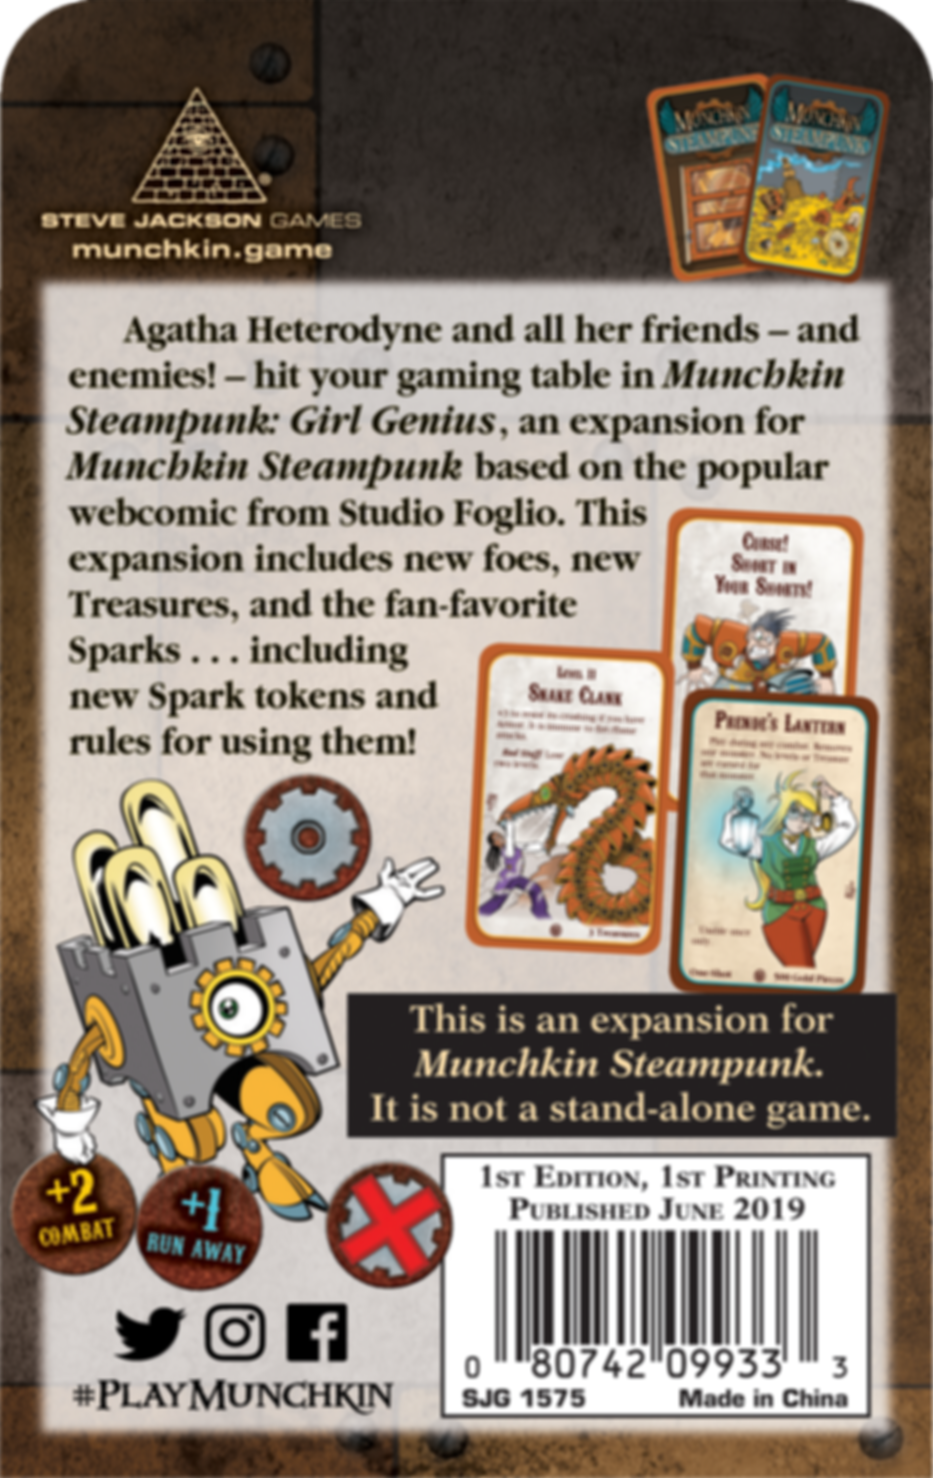 Munchkin Steampunk: Girl Genius back of the box